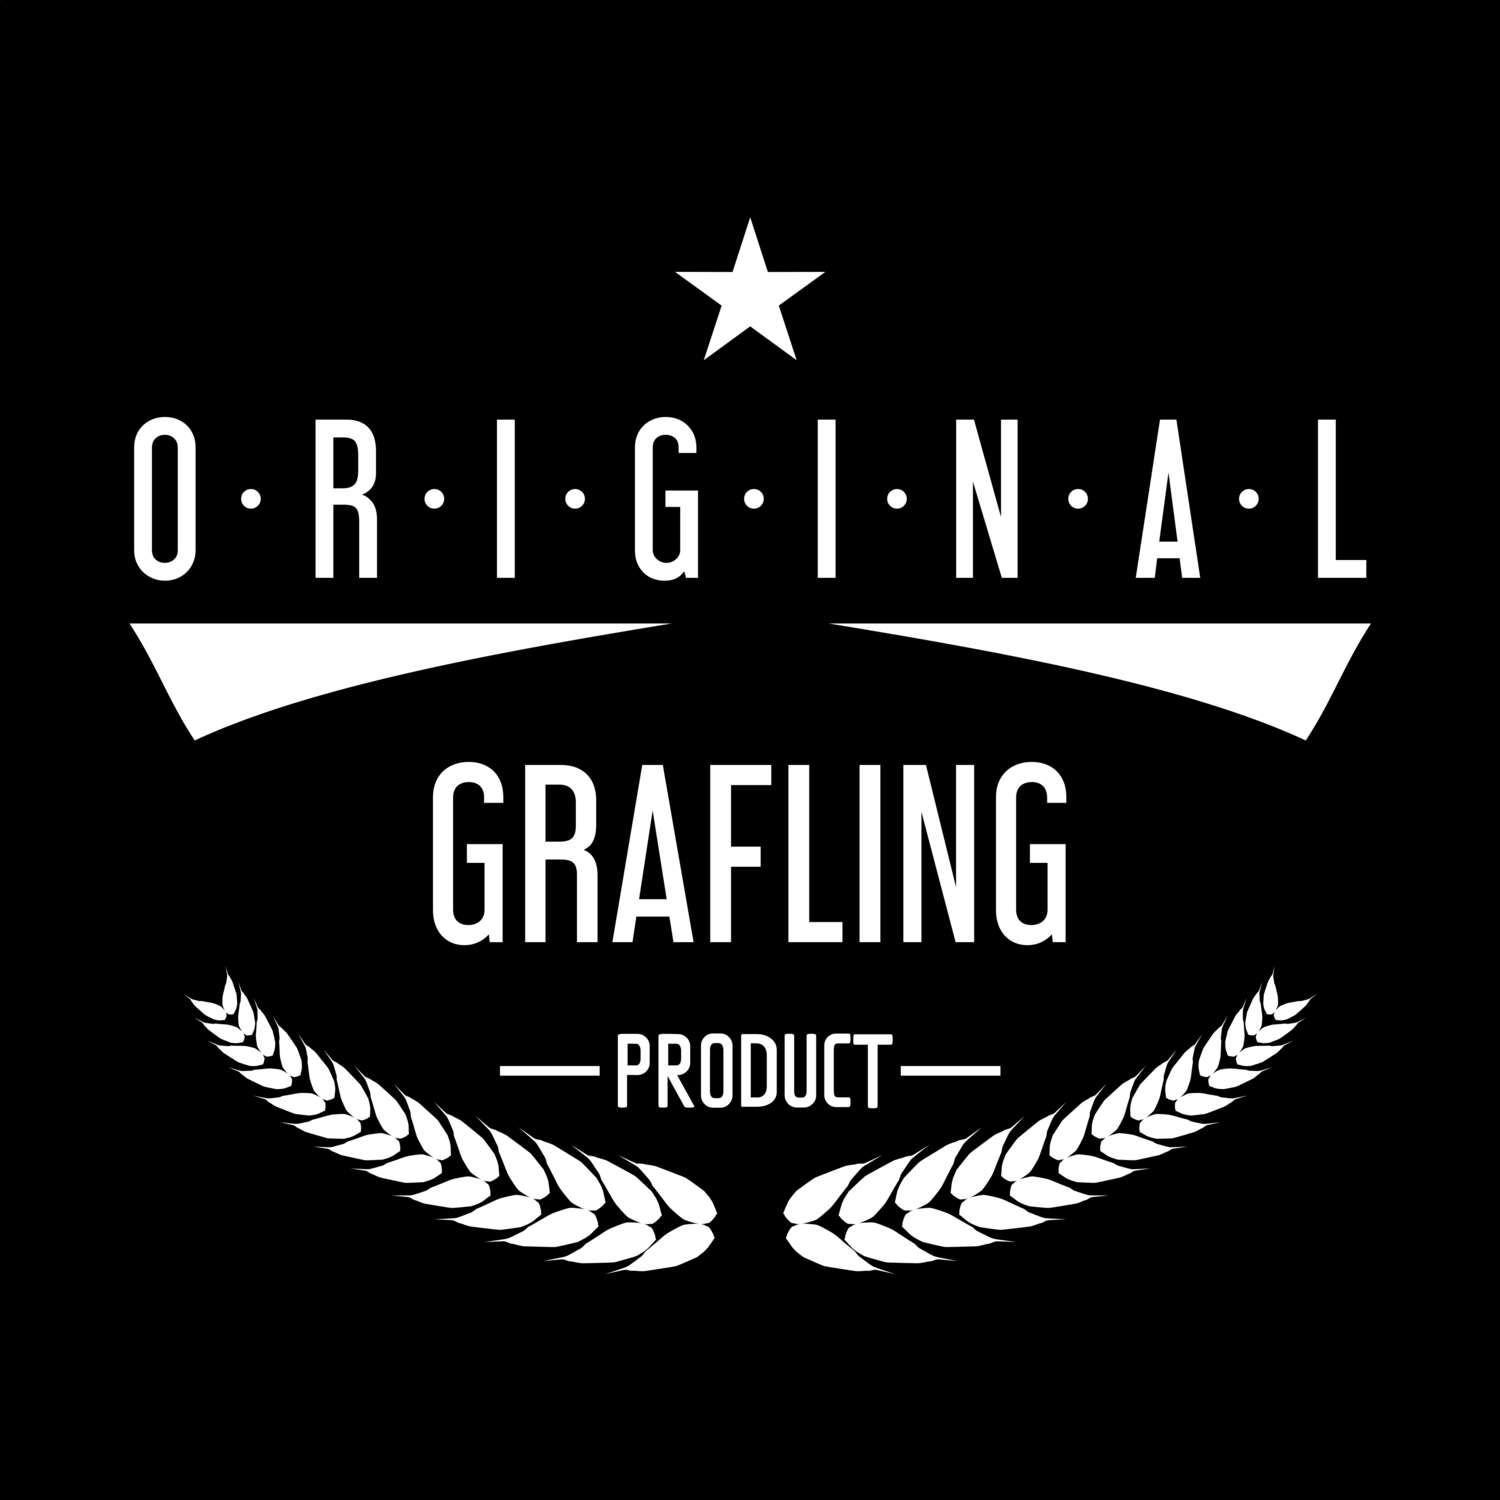 Grafling T-Shirt »Original Product«